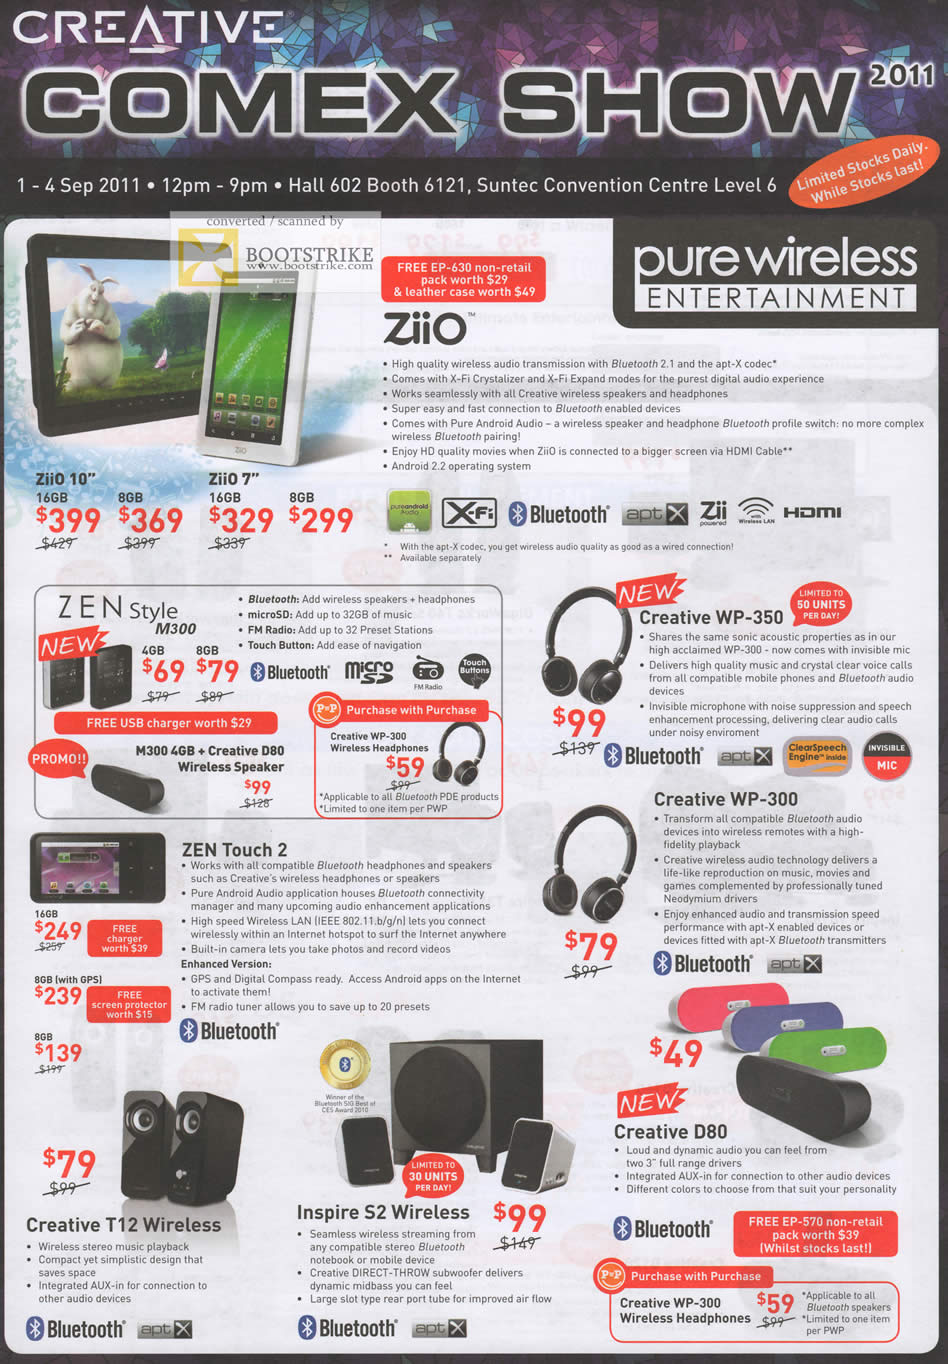 COMEX 2011 price list image brochure of Creative ZiiO 10 Style M300 Headset WP-350 300 Zen Touch 2 Speakers T12 Wireless Inspire S2 D80